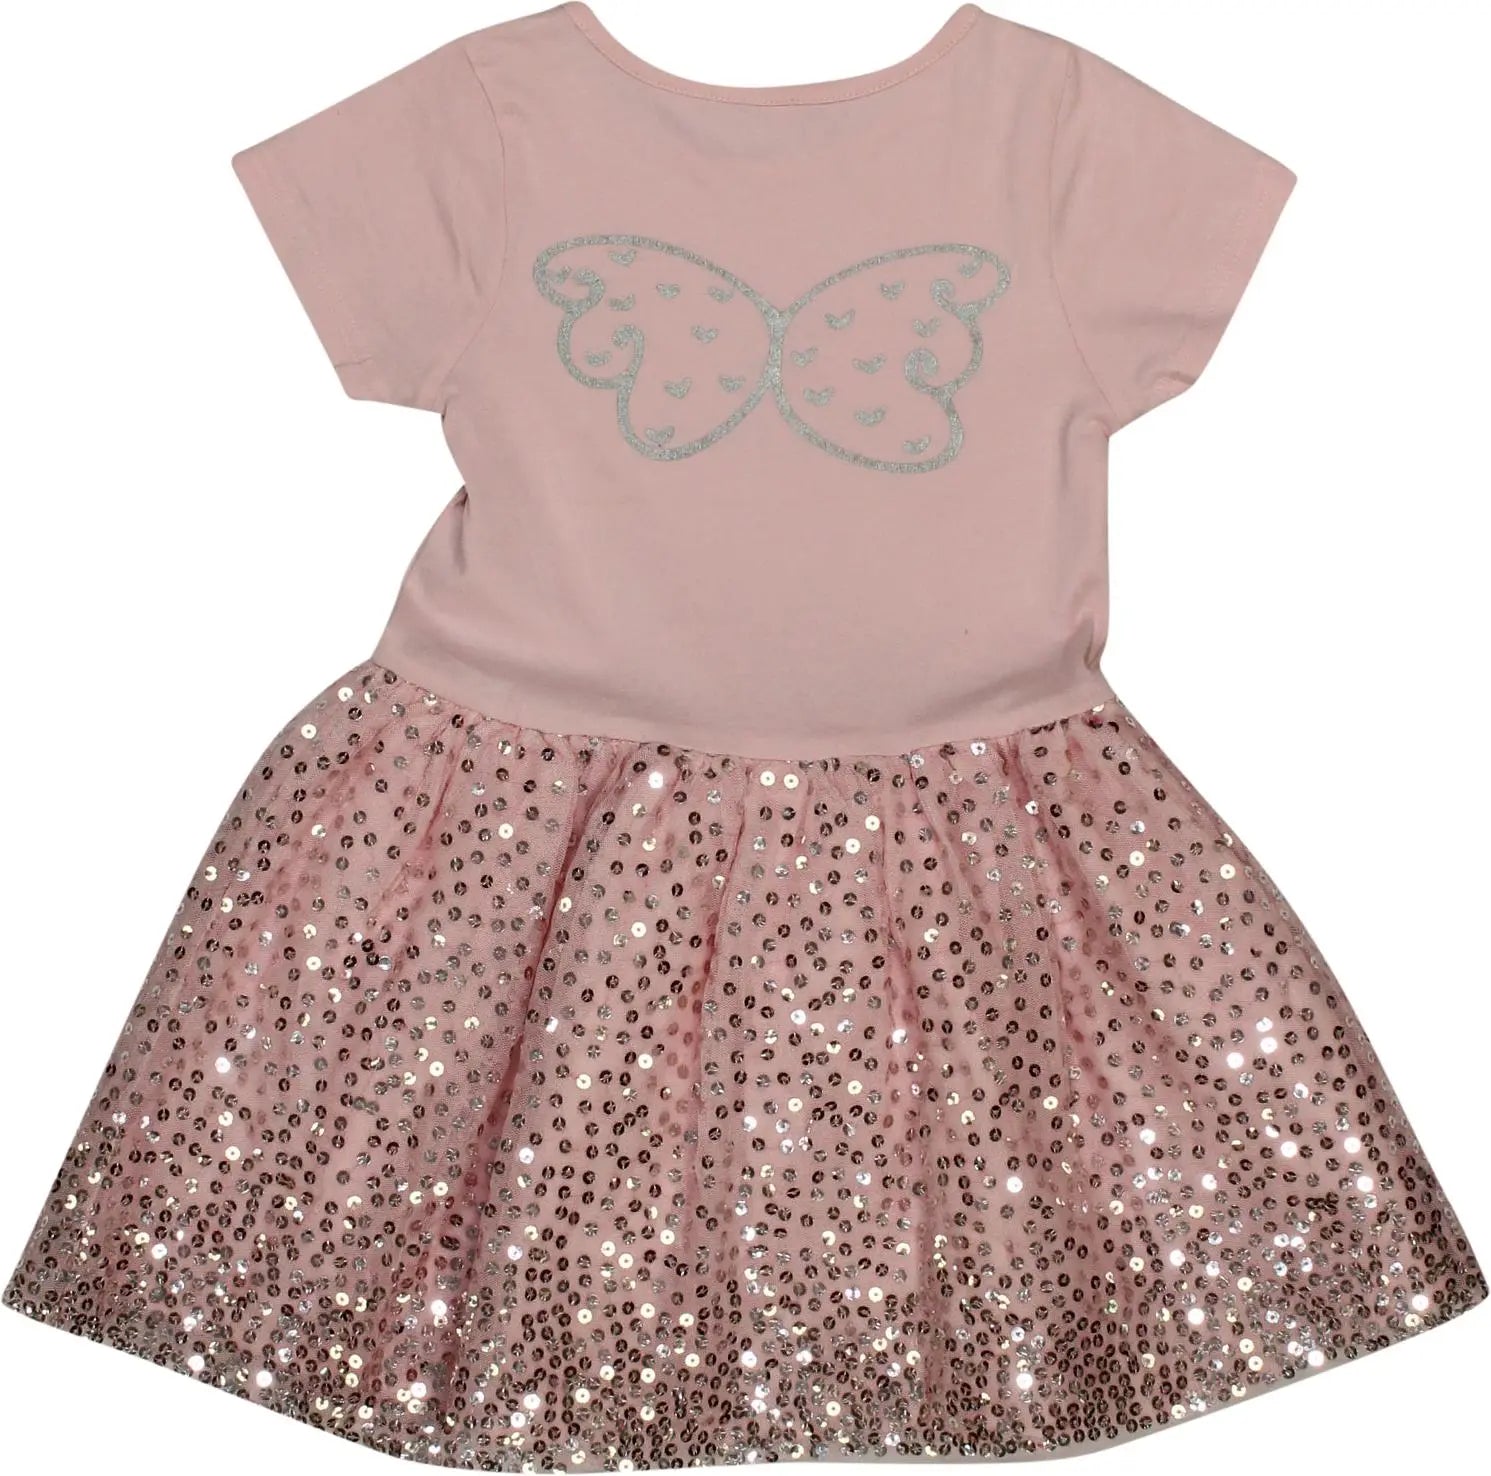 Zeeman - Pink Dress- ThriftTale.com - Vintage and second handclothing